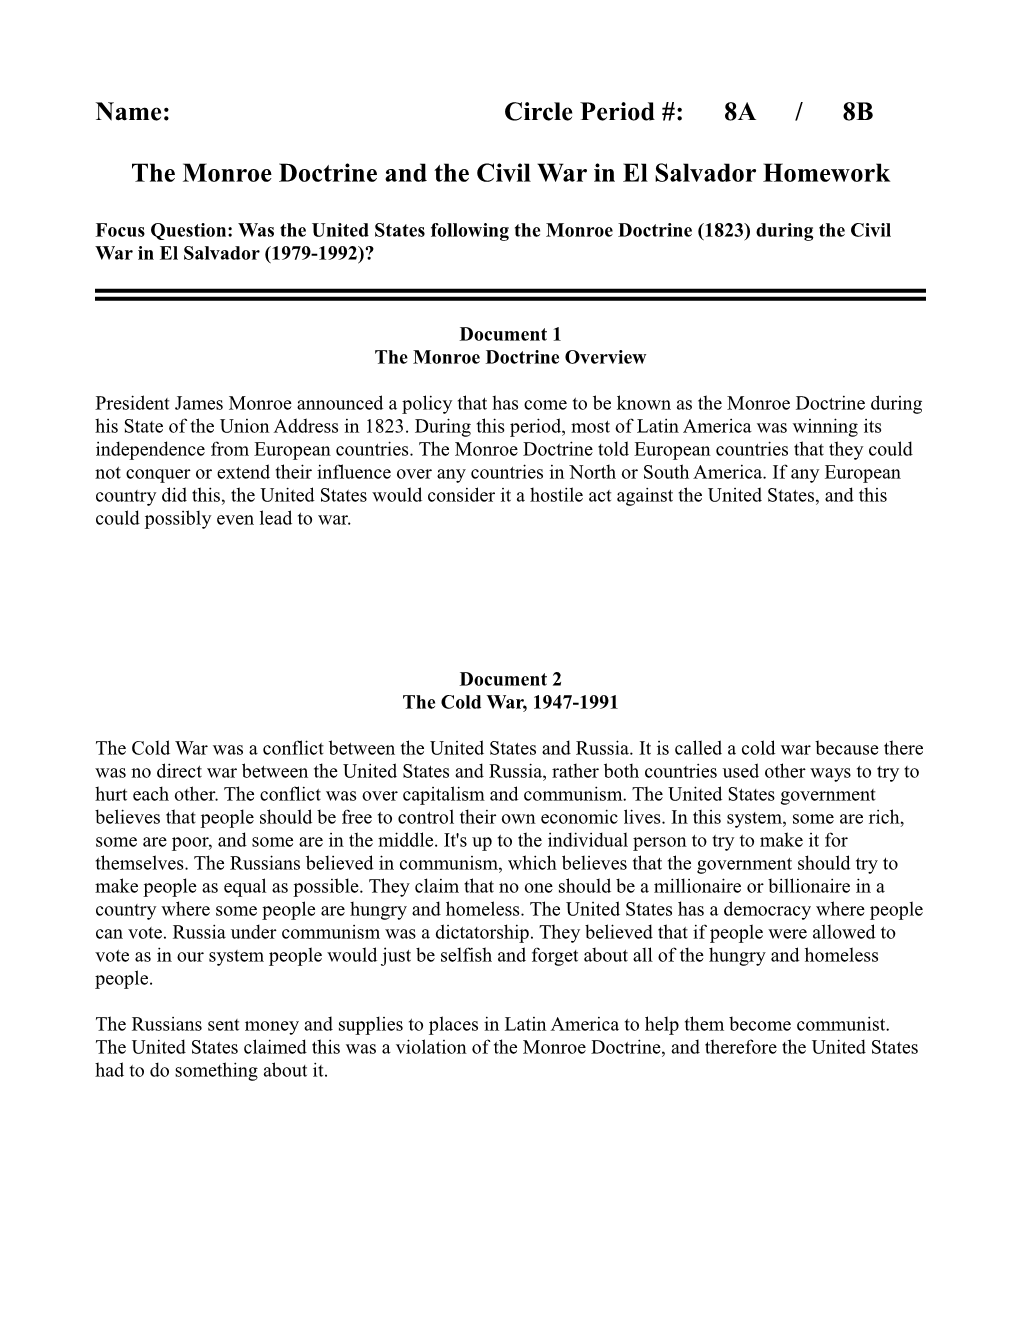 The Monroe Doctrine and the Civil War in El Salvador Homework